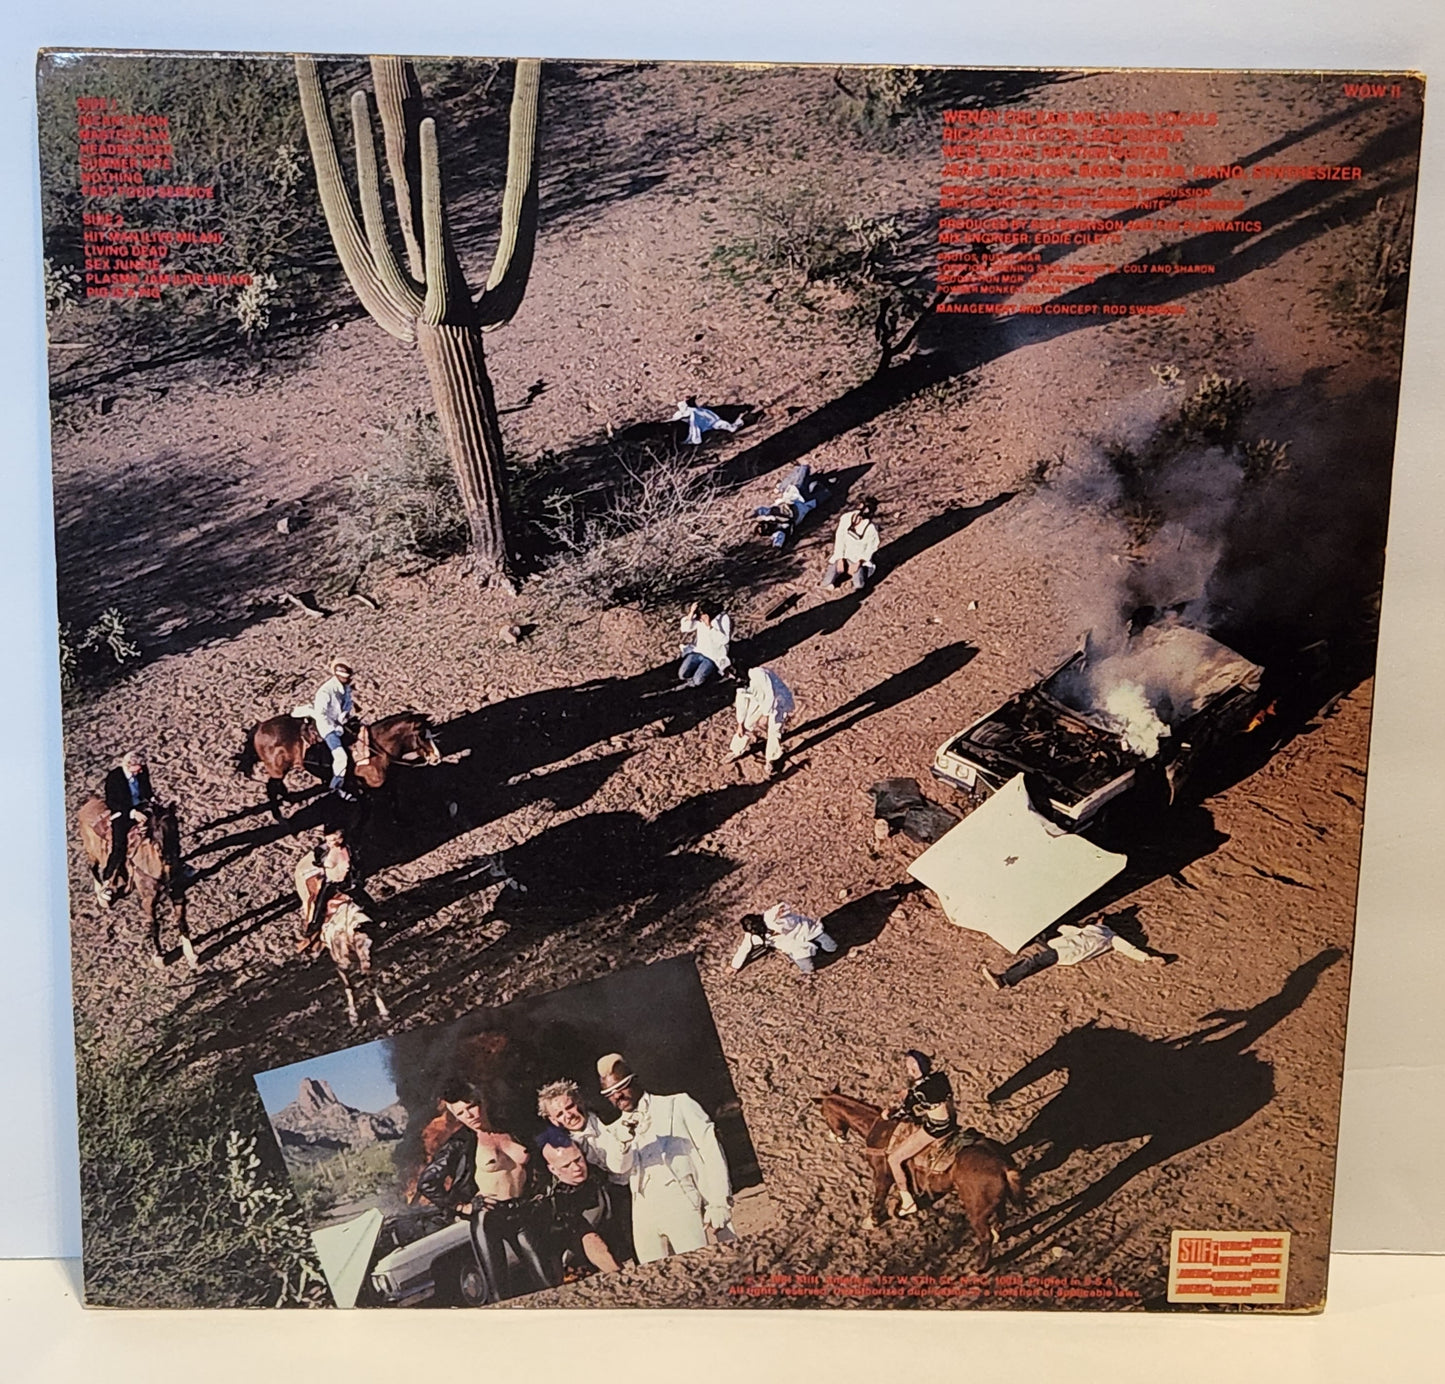 Plasmatics "Beyond The Valley of 1984" 1981 Punk Rock Record Album